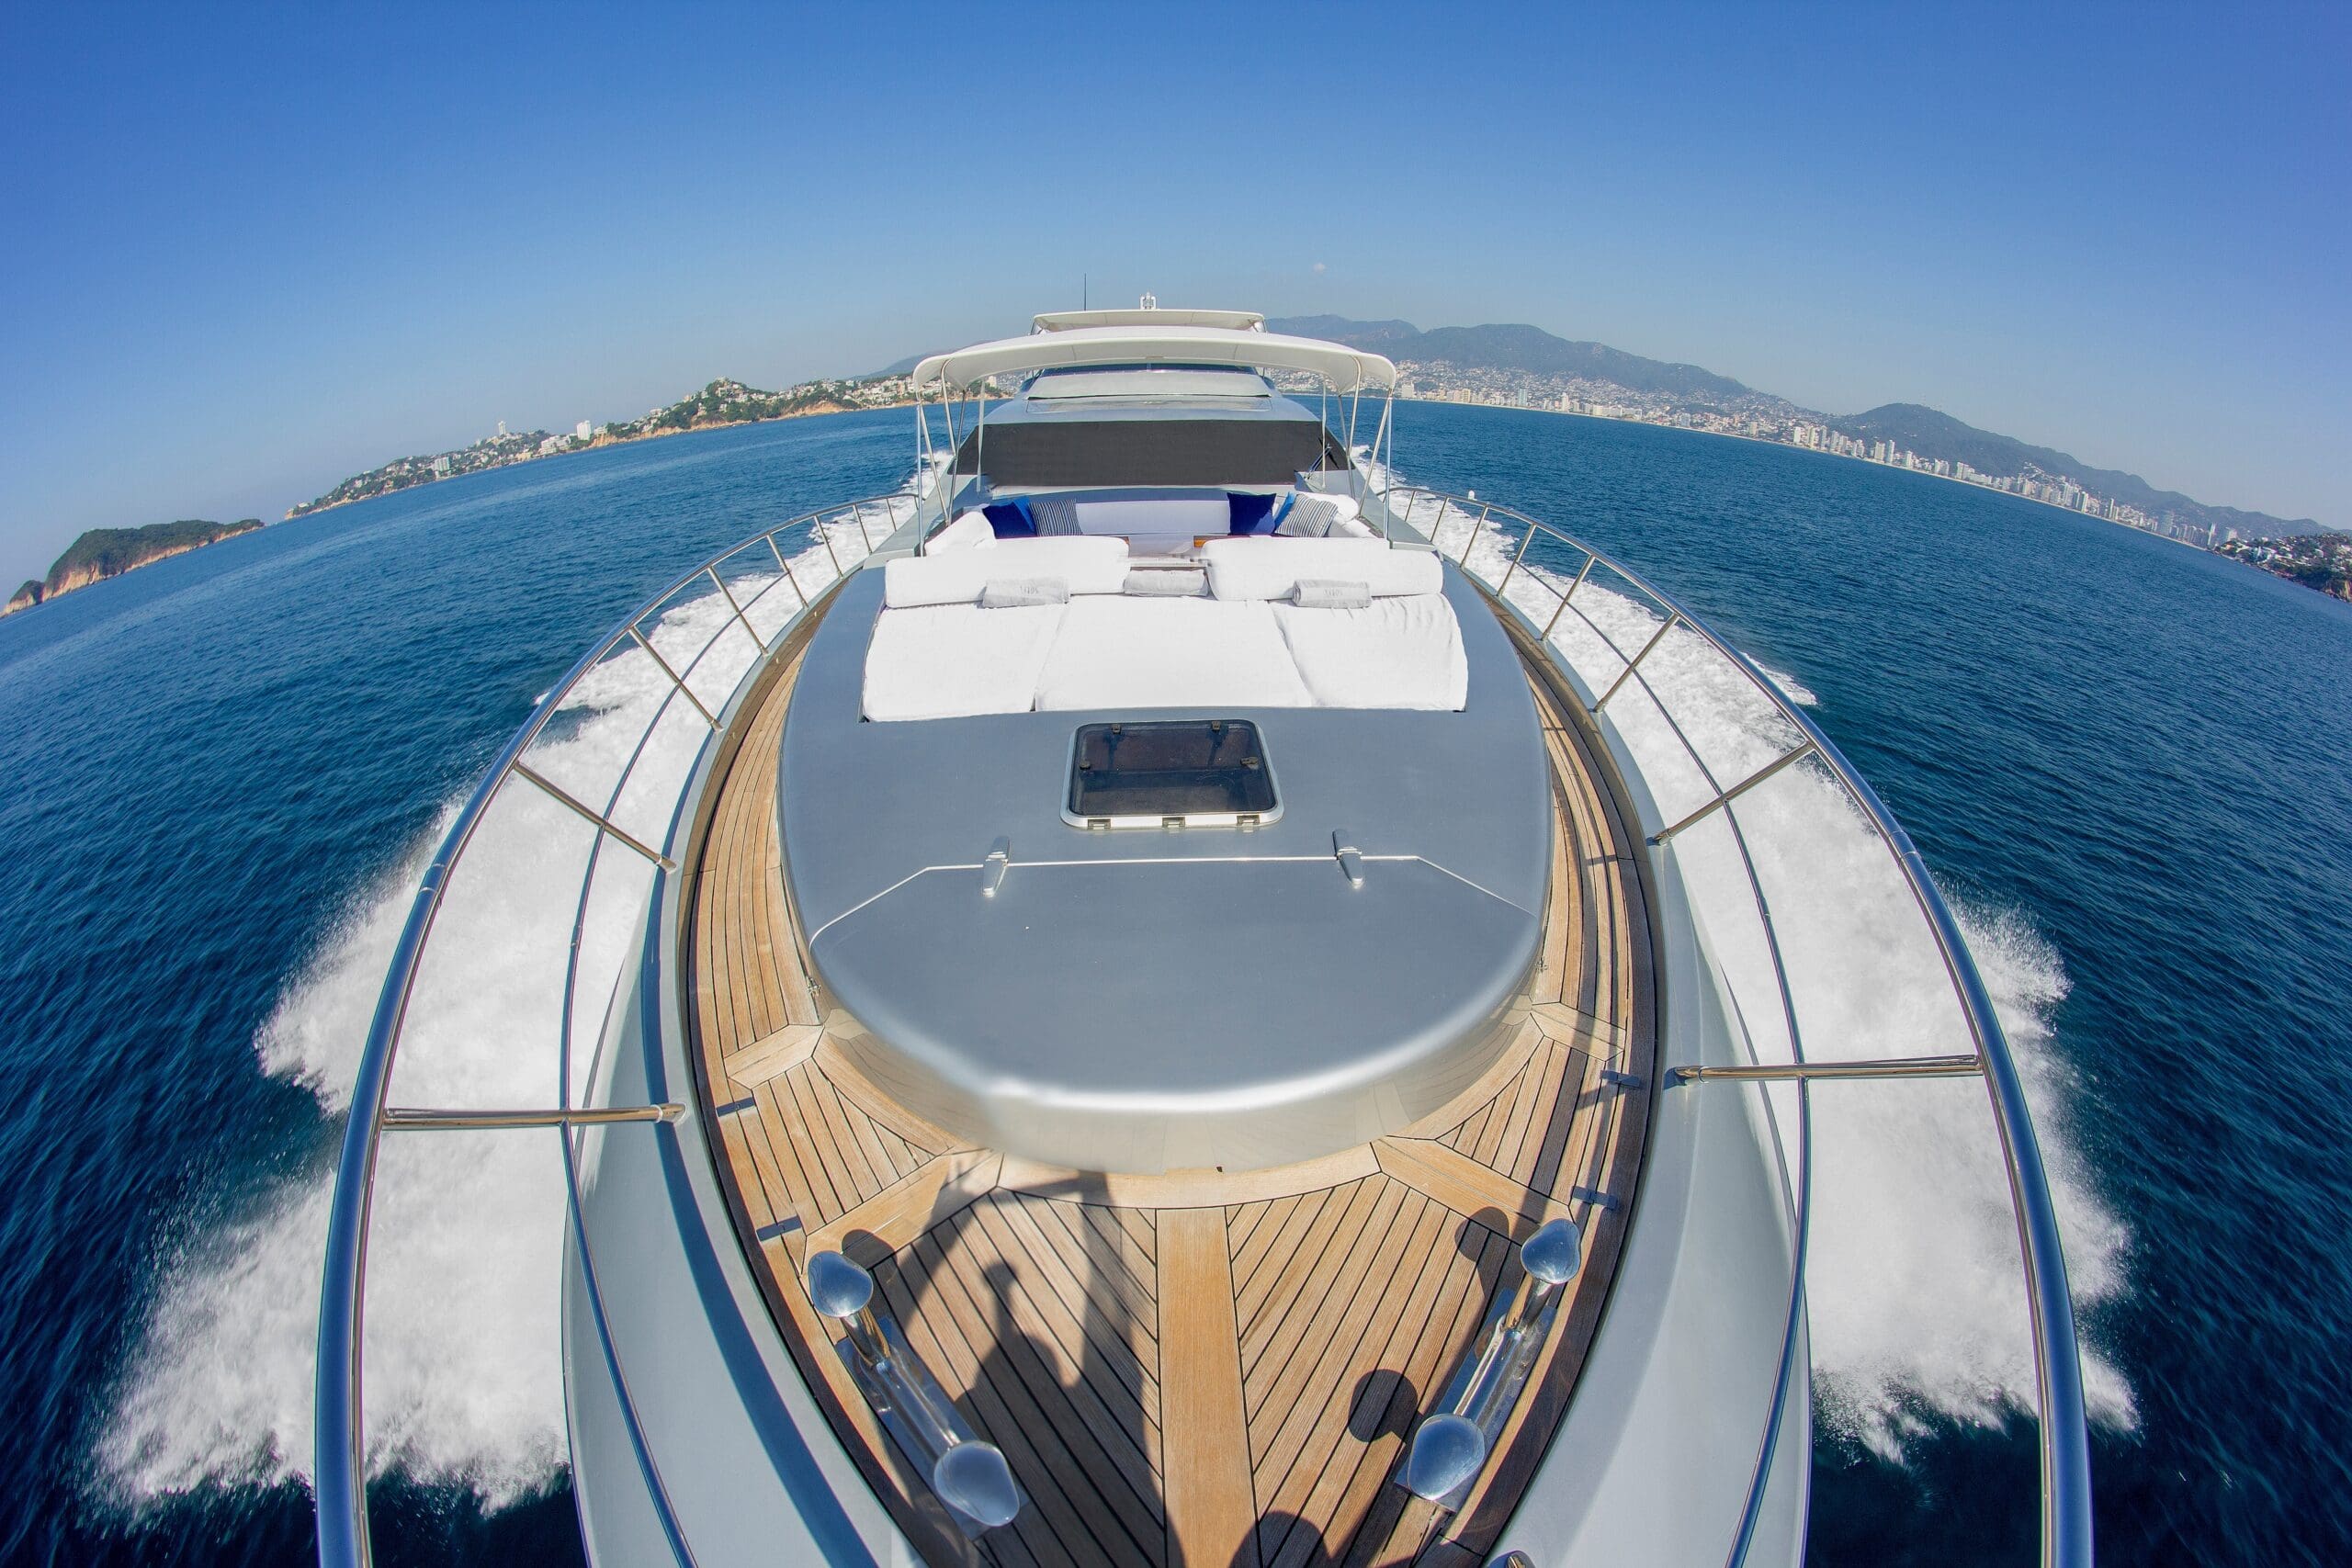 luxury-boat-2022-11-02-16-33-36-utc-scaled.jpg